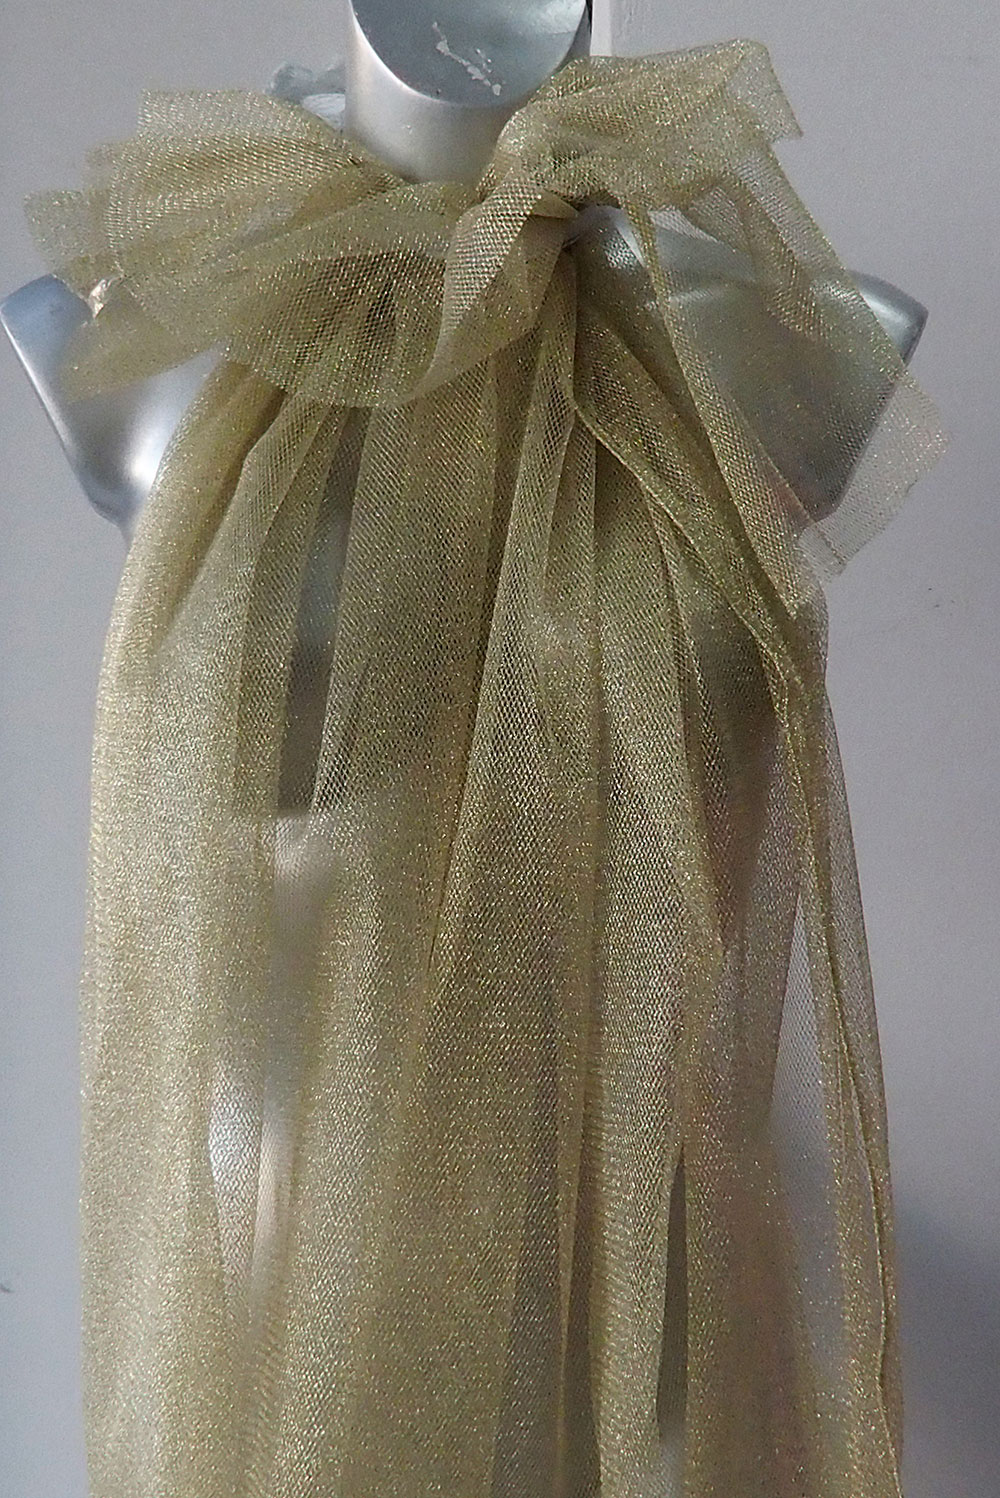 Gold Metallic tulle mesh fabric for dressmaking